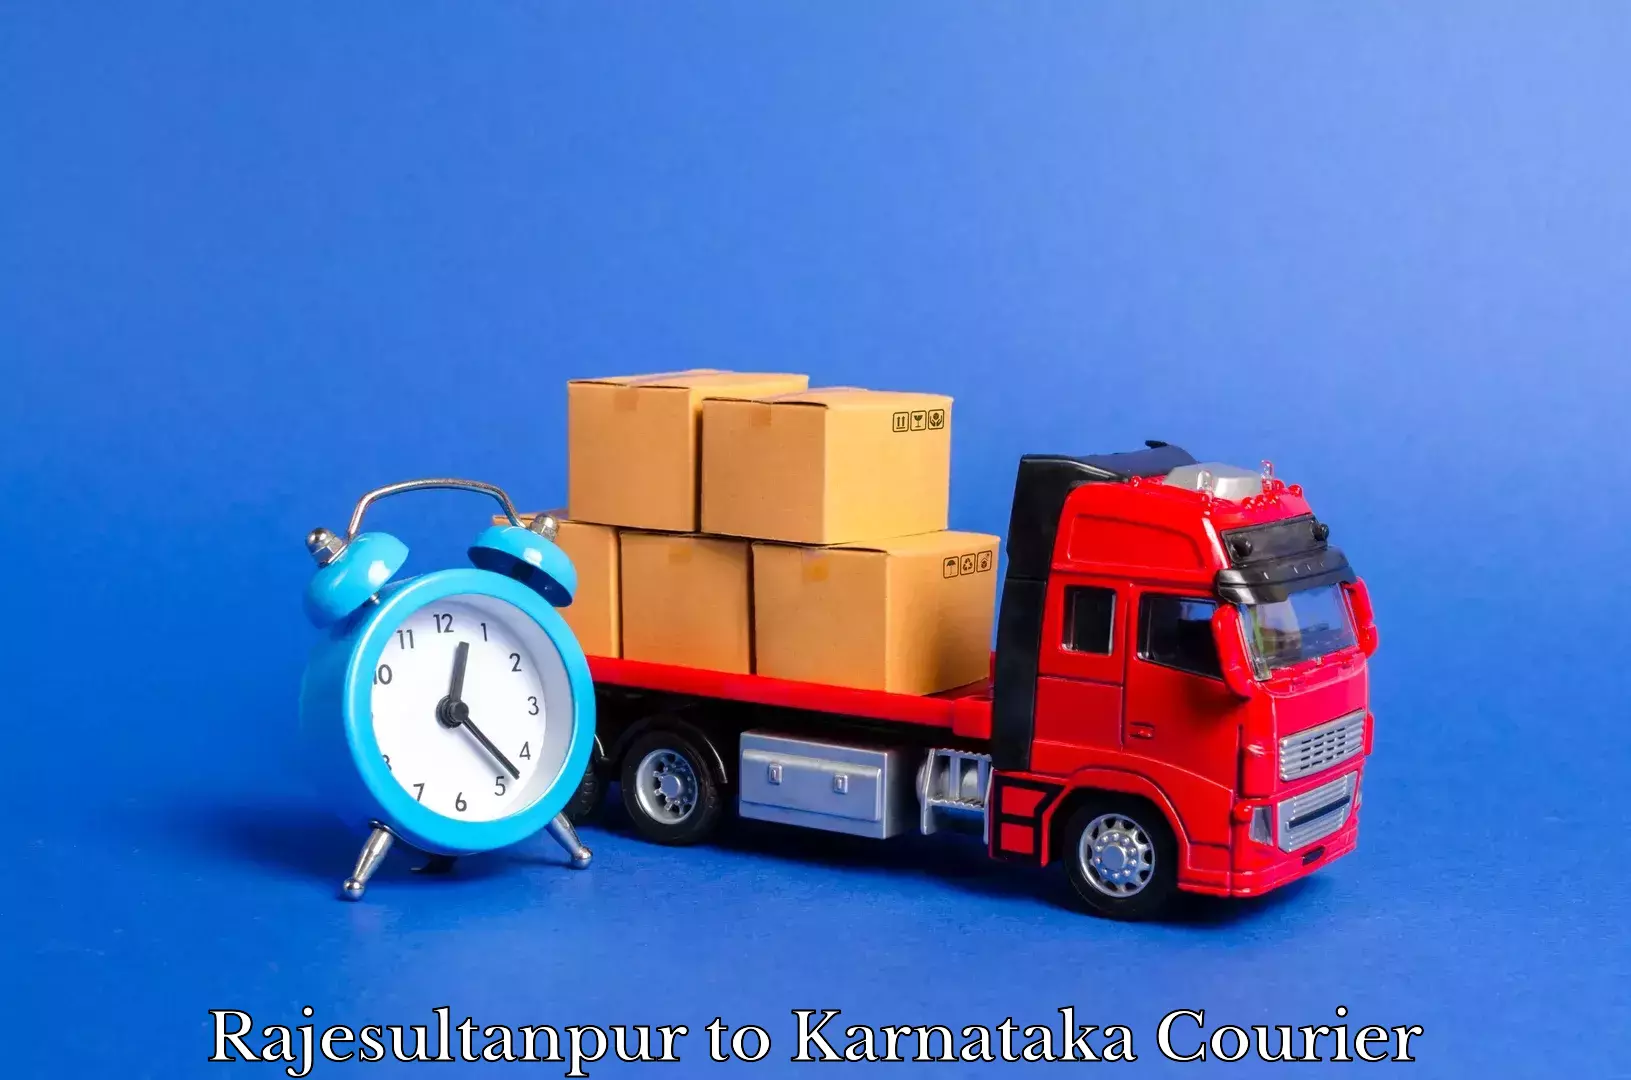 Furniture transport and storage Rajesultanpur to Deodurga